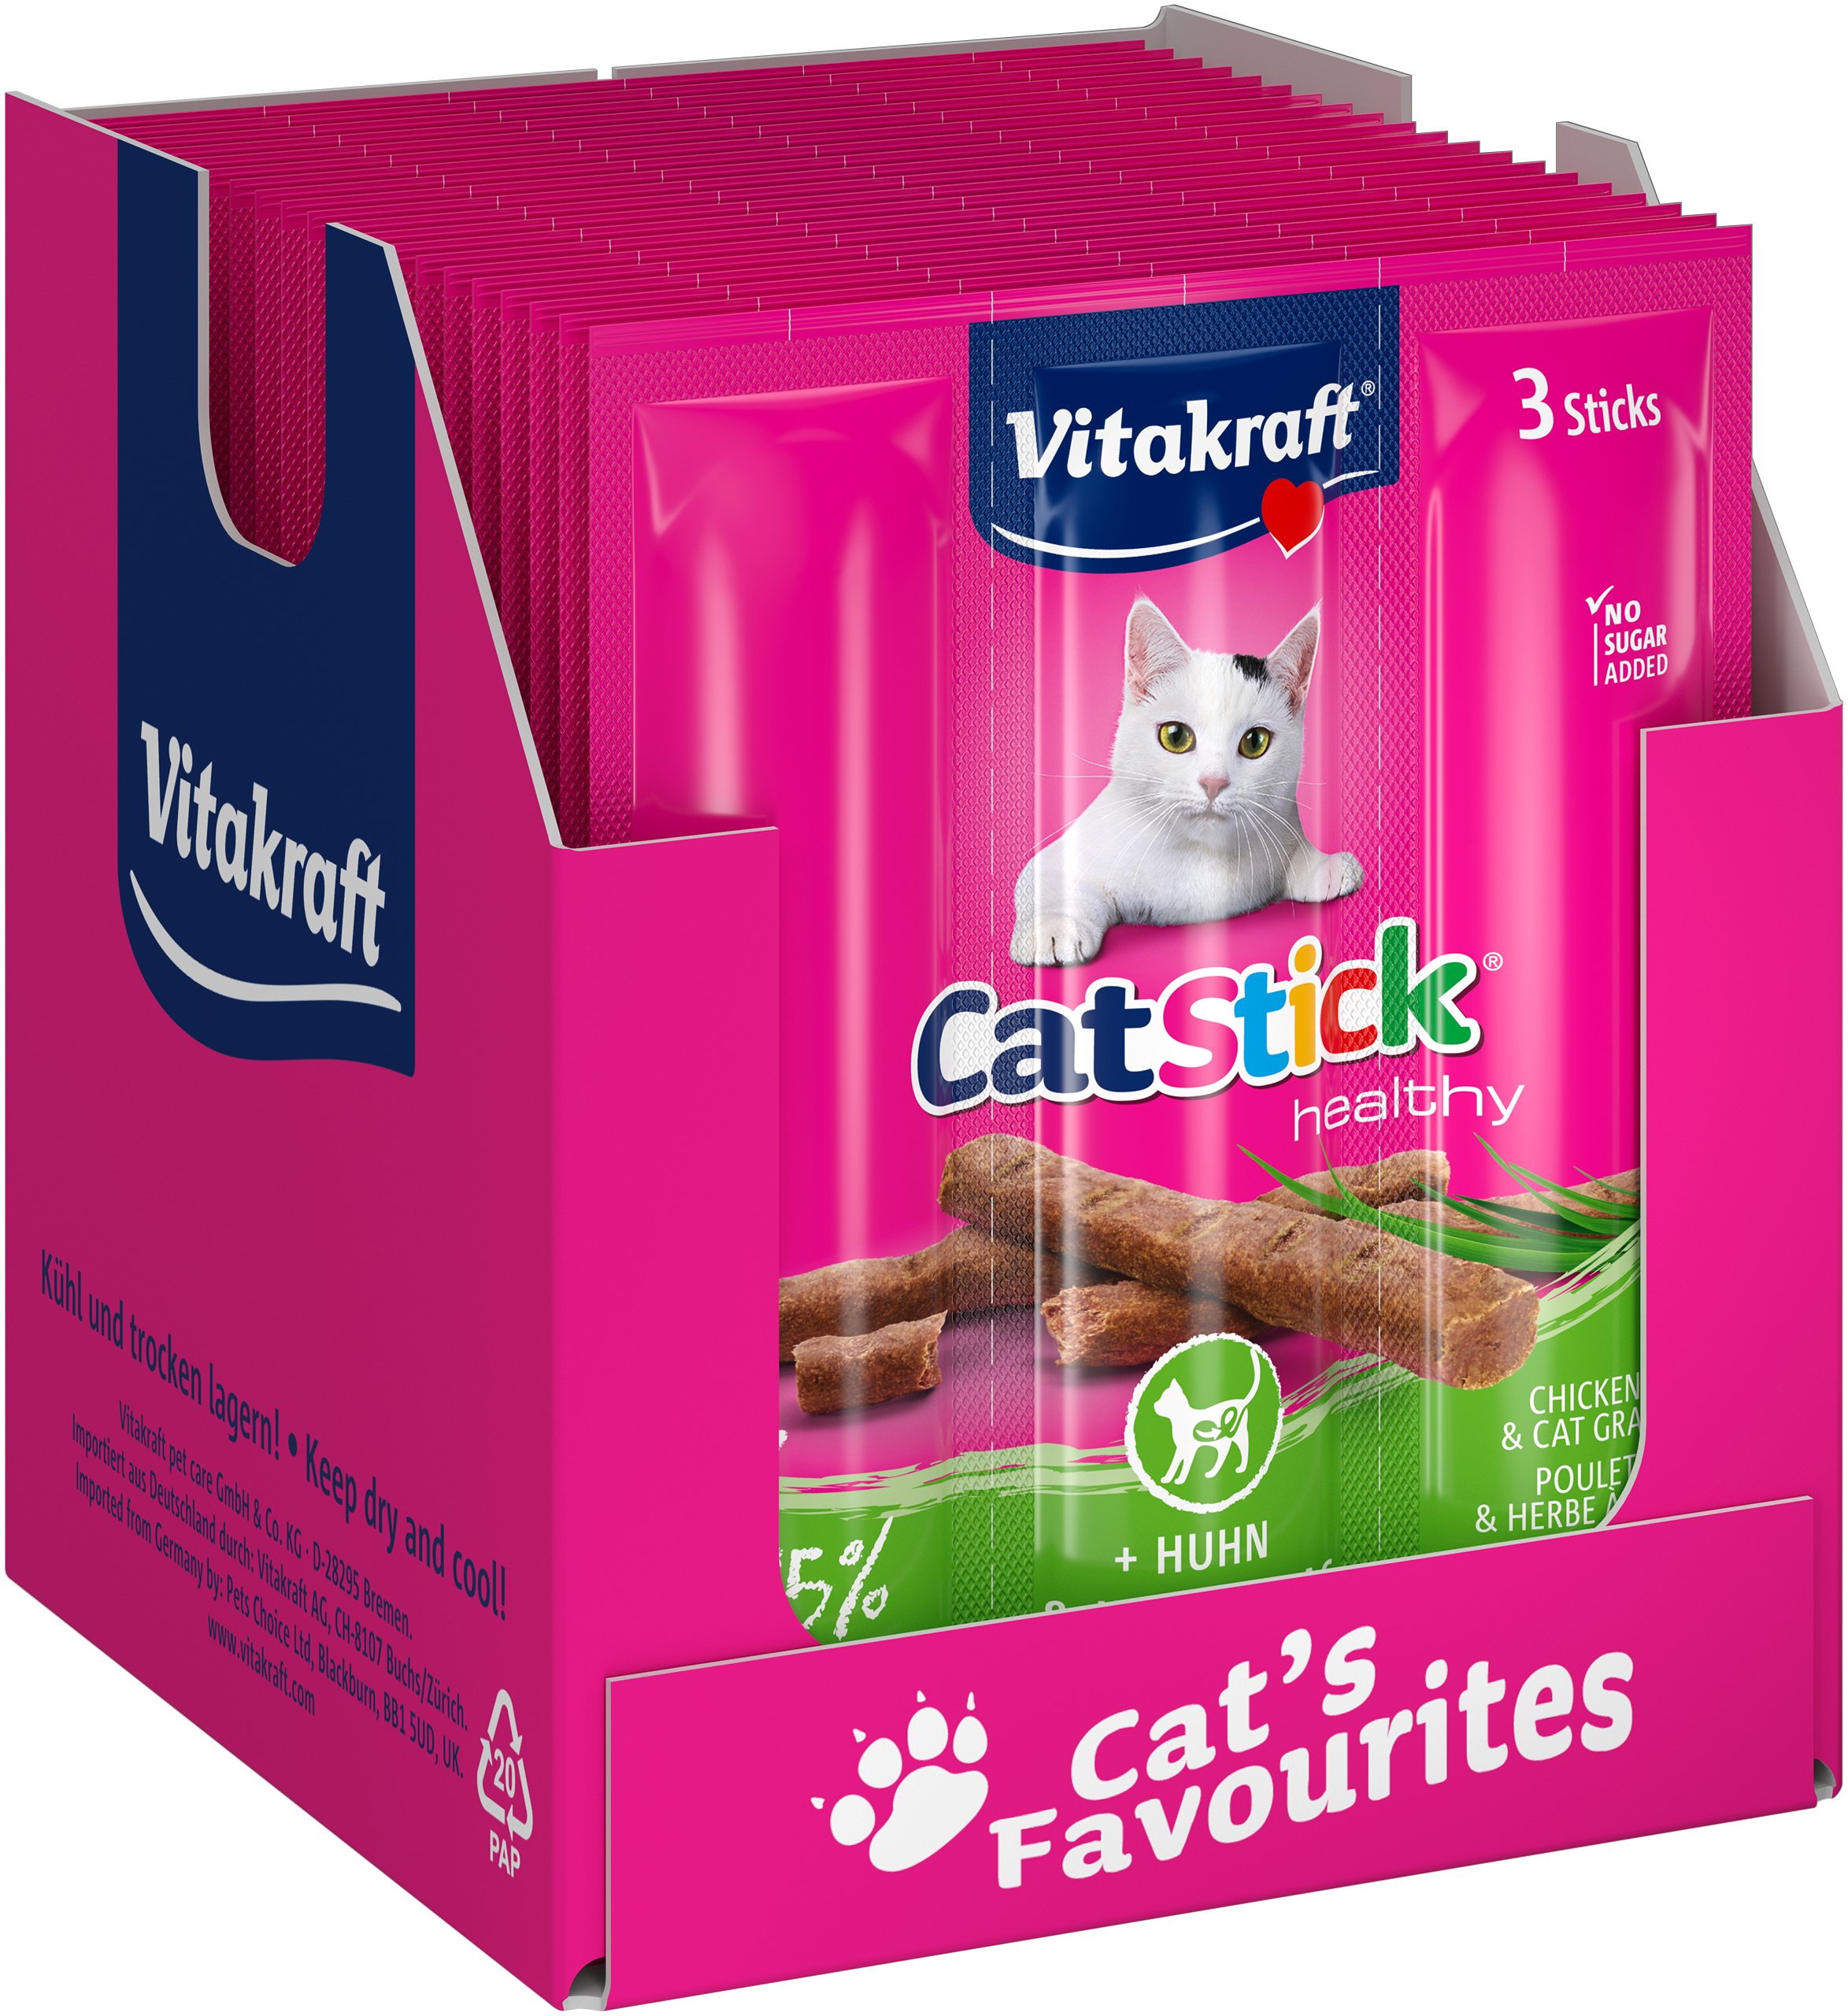 Vitakraft - Cat treats - 20 x Cat Stick chicken&cat grass x 3 sticks 18g - Kjæledyr og utstyr